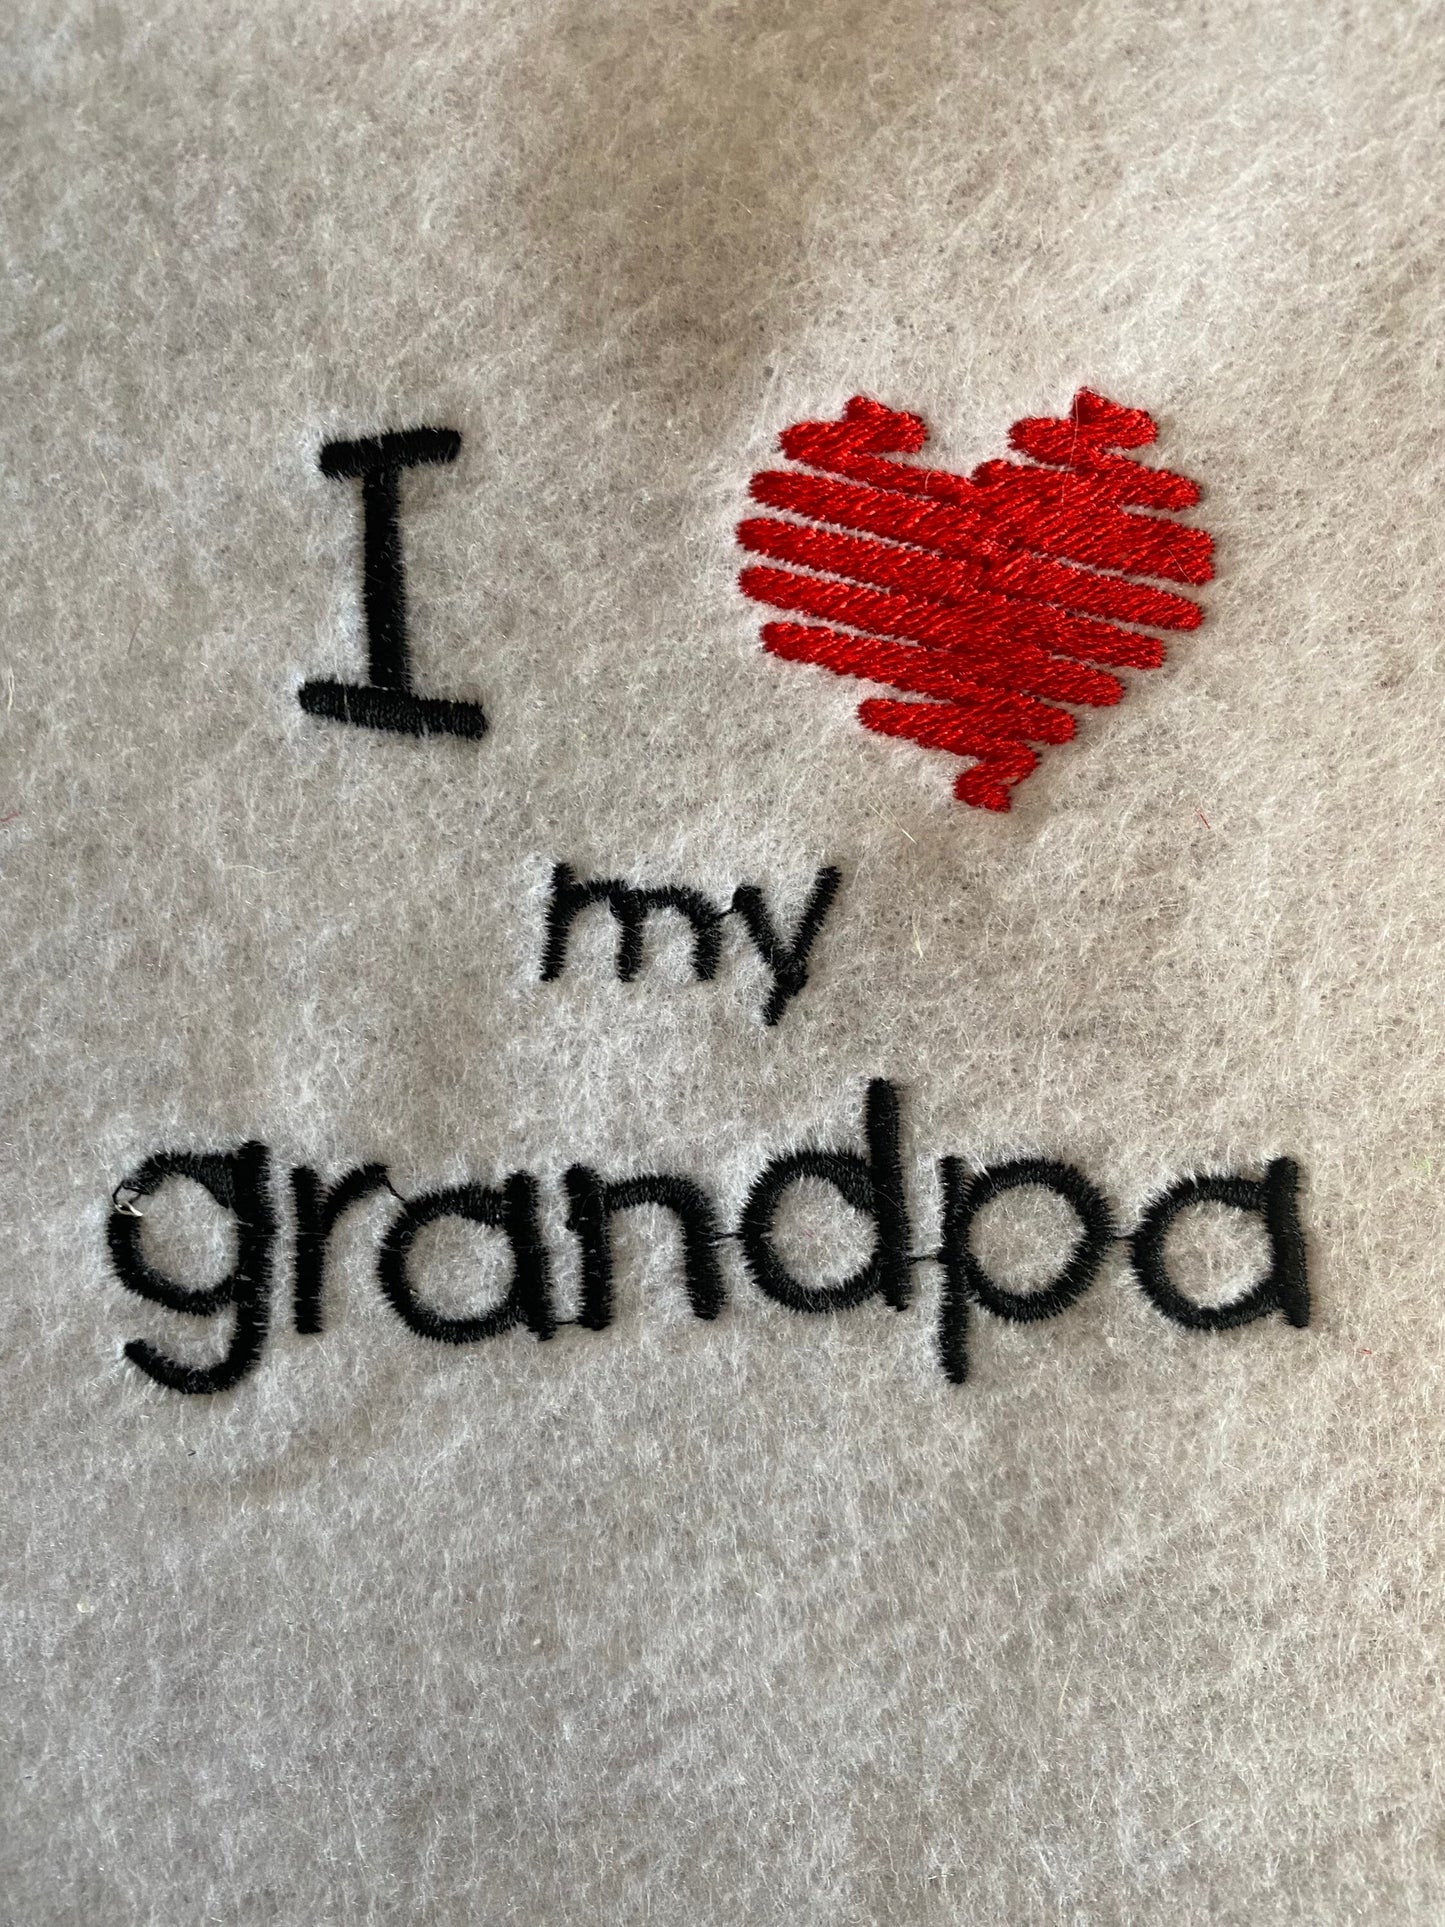 I love my grandpa heart hoodie sweatshirt custom personalised gifts heart family grandma best seller most popular Mommy Daddy Choose name